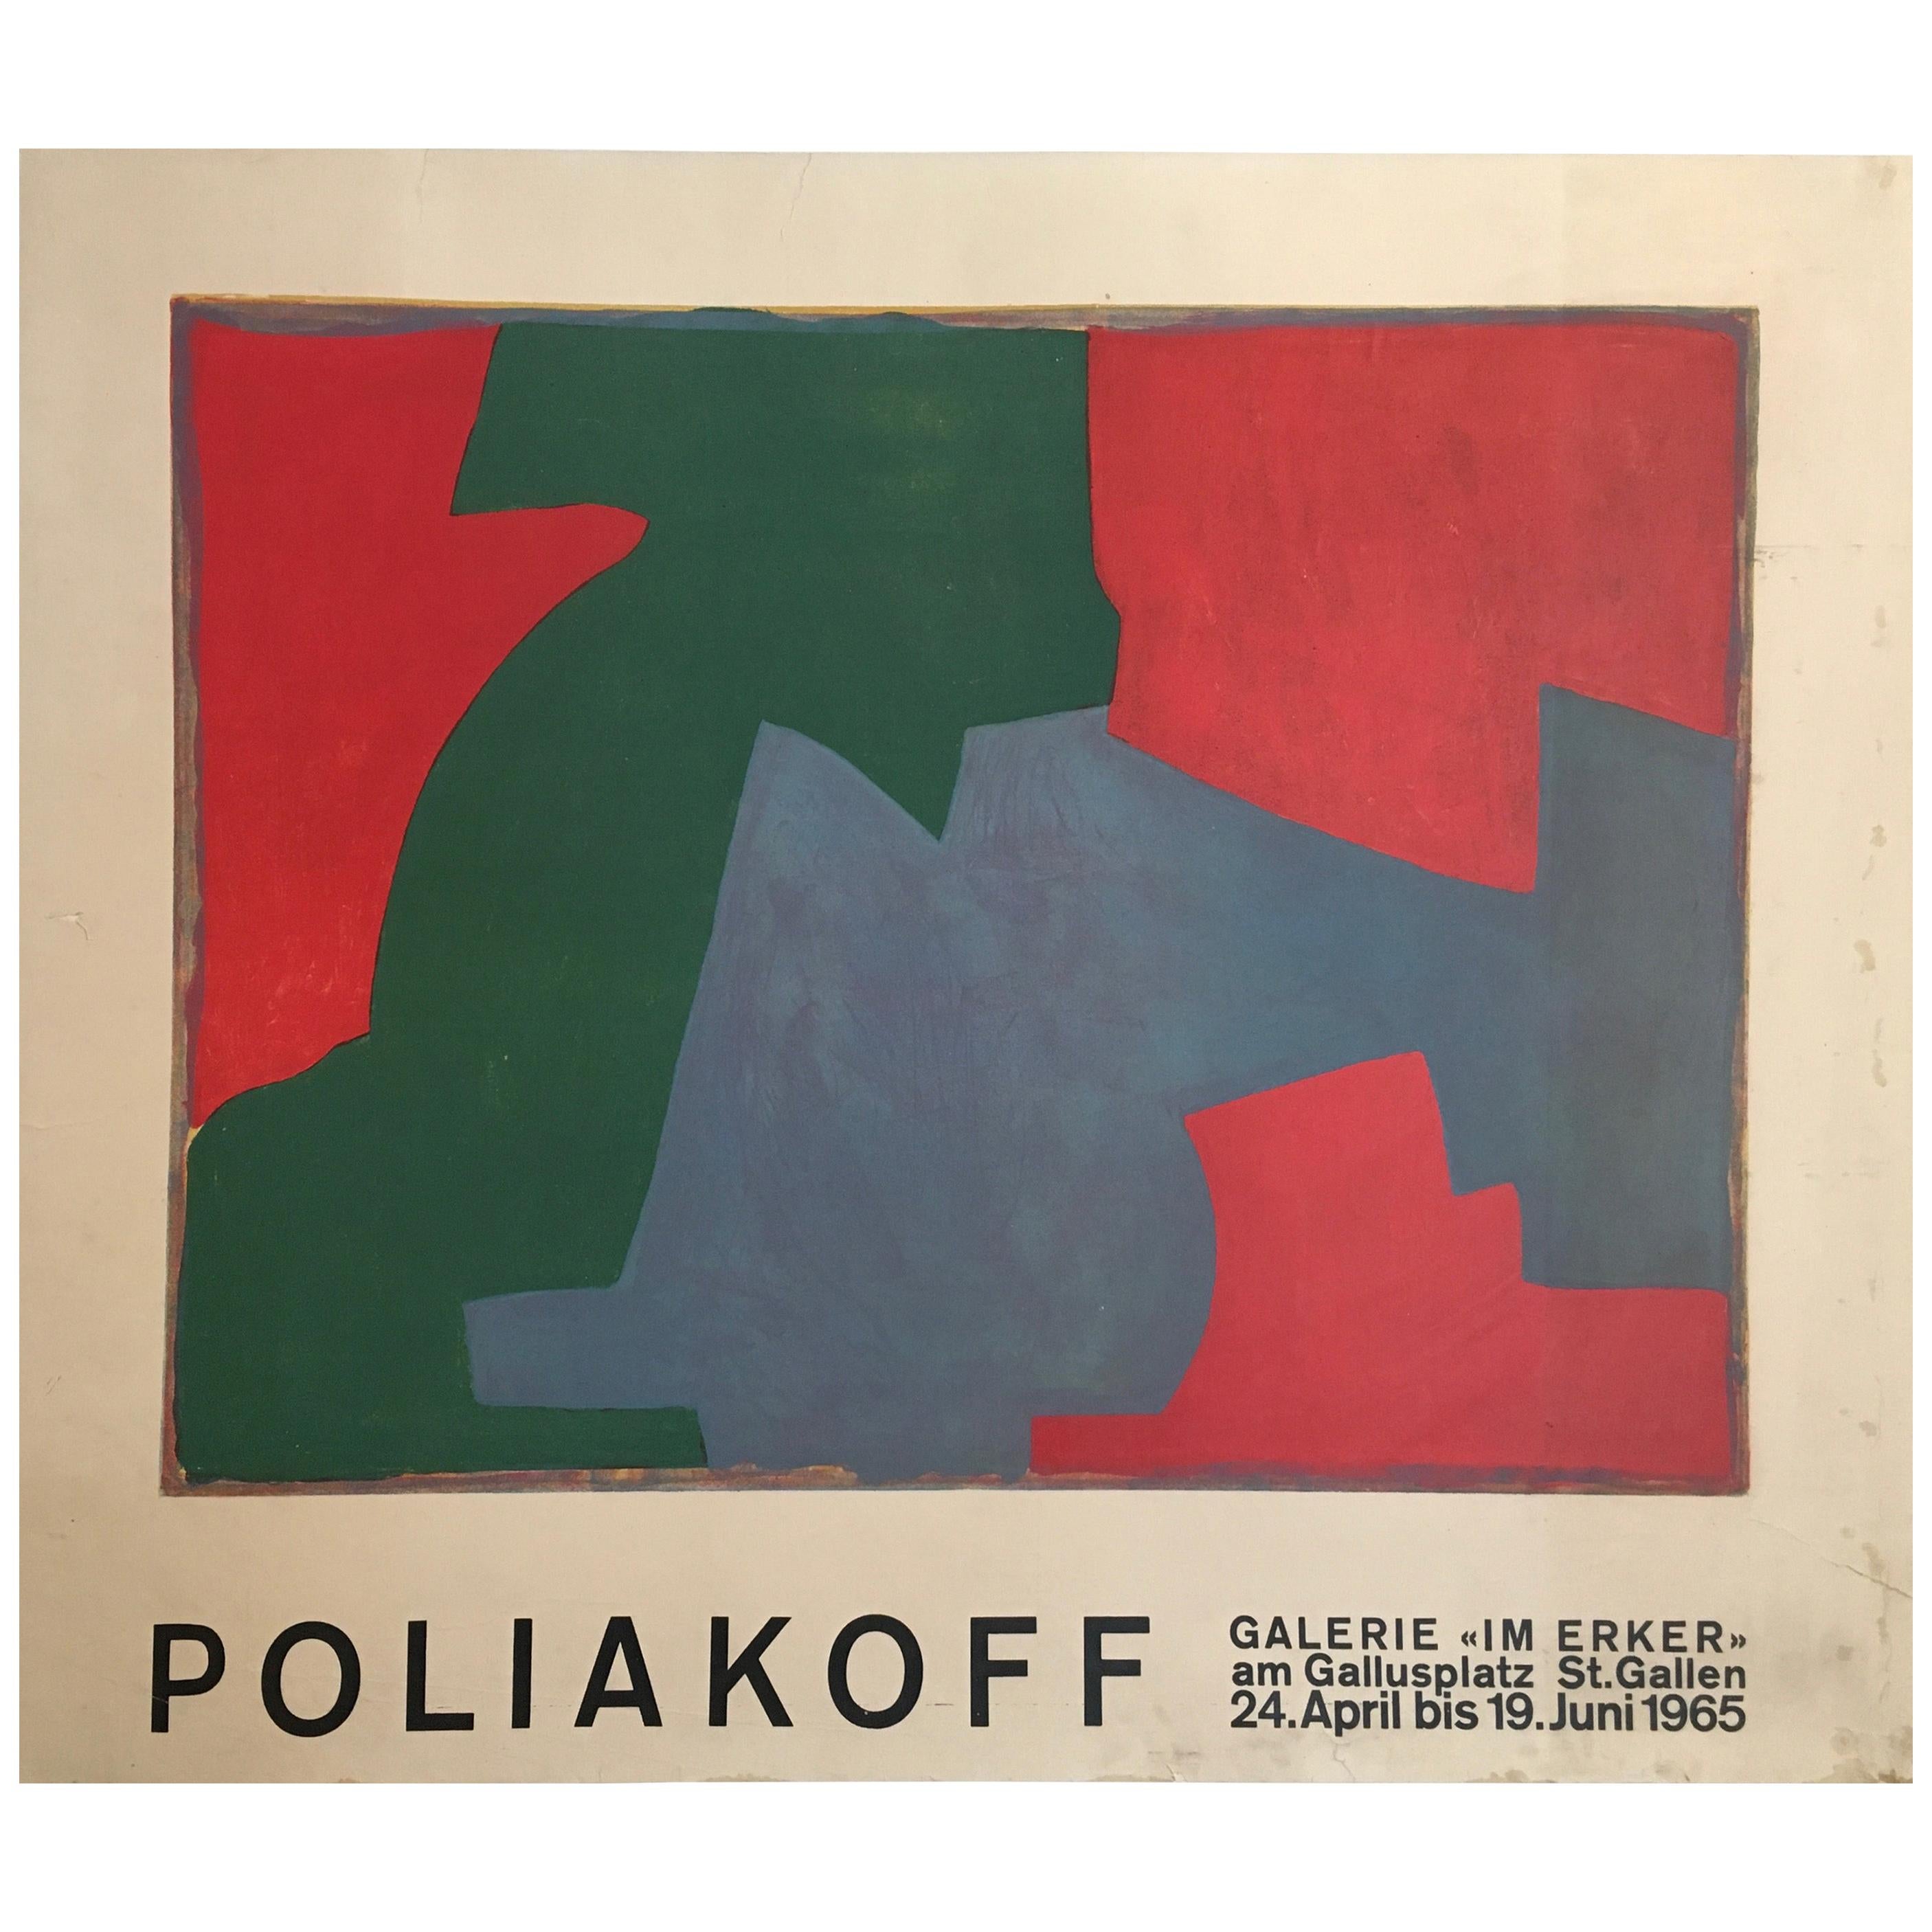 Original Vintage Exhibition Poster by Serge Poliakoff 1965 Modernist Art